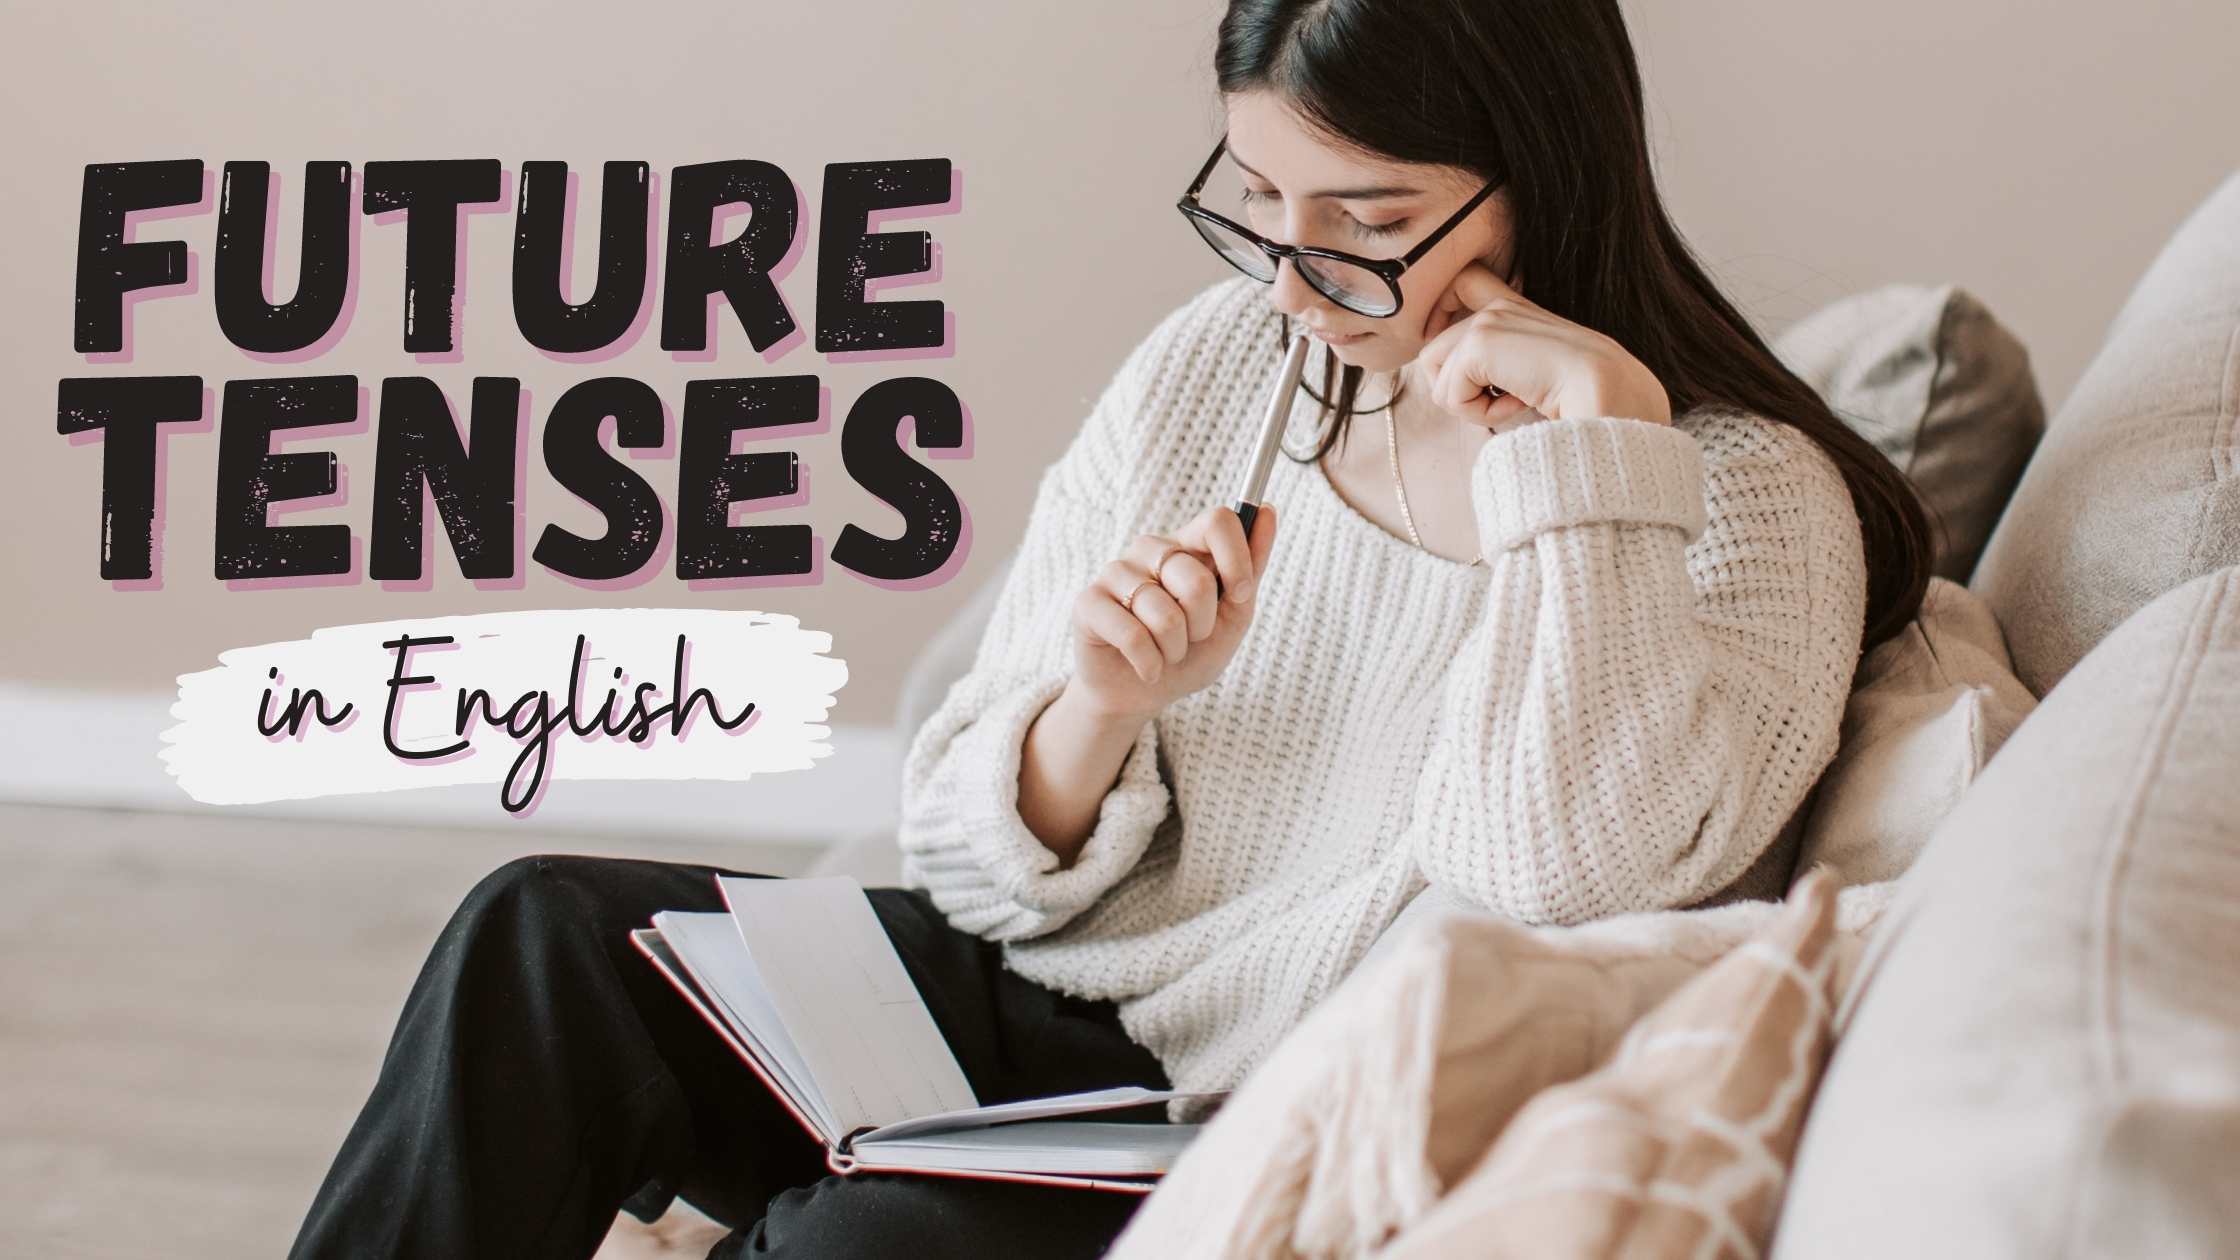 ypes of future tenses in english, future tenses in english grammar with examples, future tenses in english